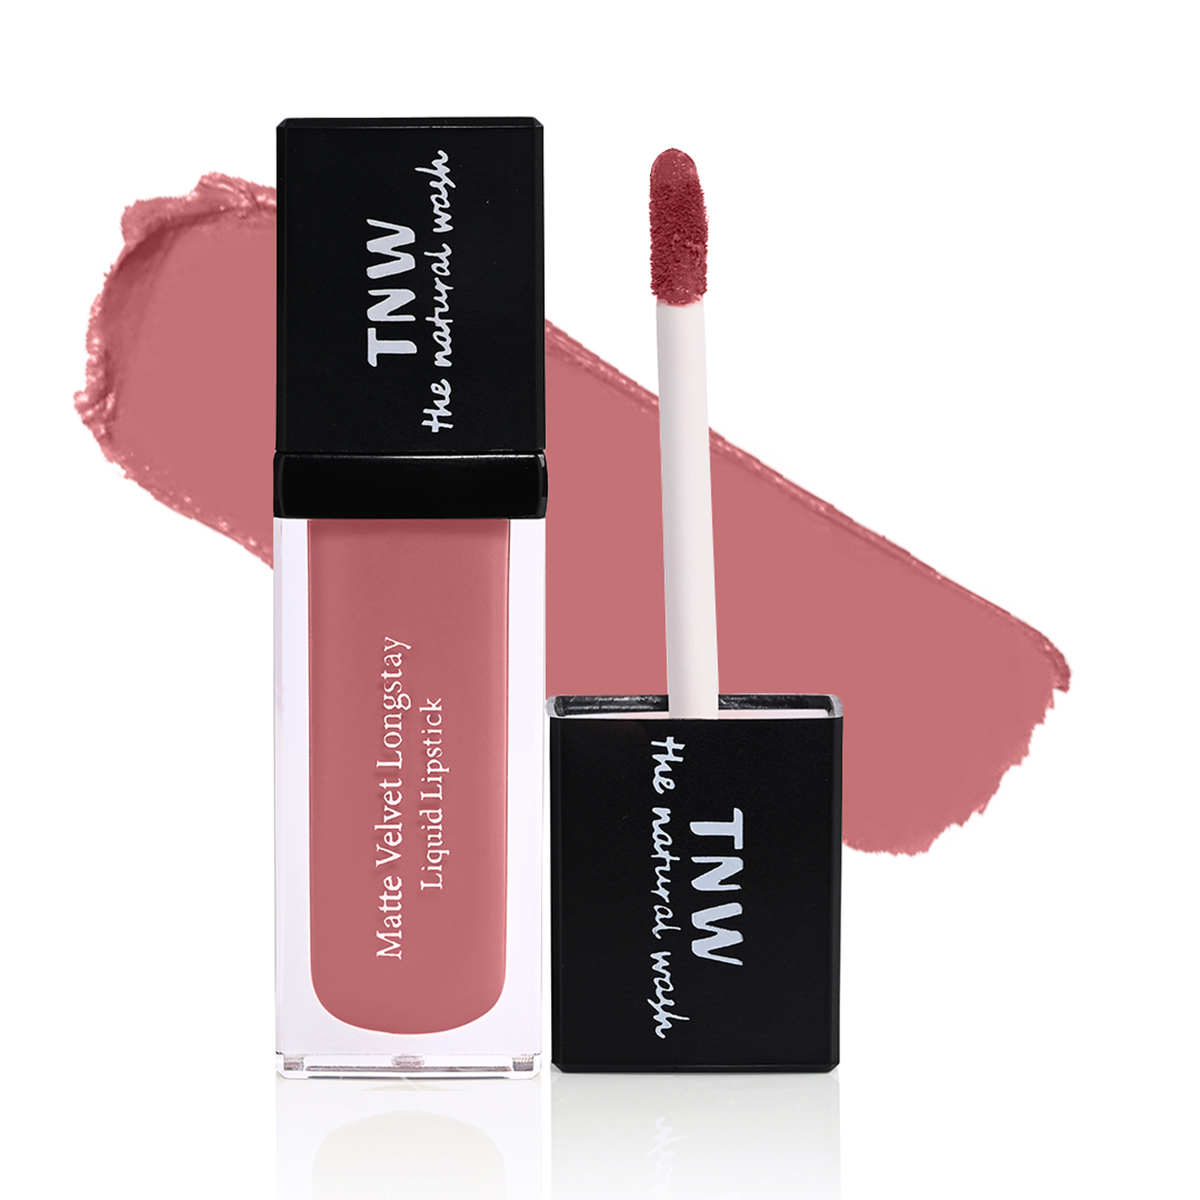 TNW - The Natural Wash Matte Velvet Longstay Liquid Lipstick, 04 - Pinktastic - Pink, 5ml